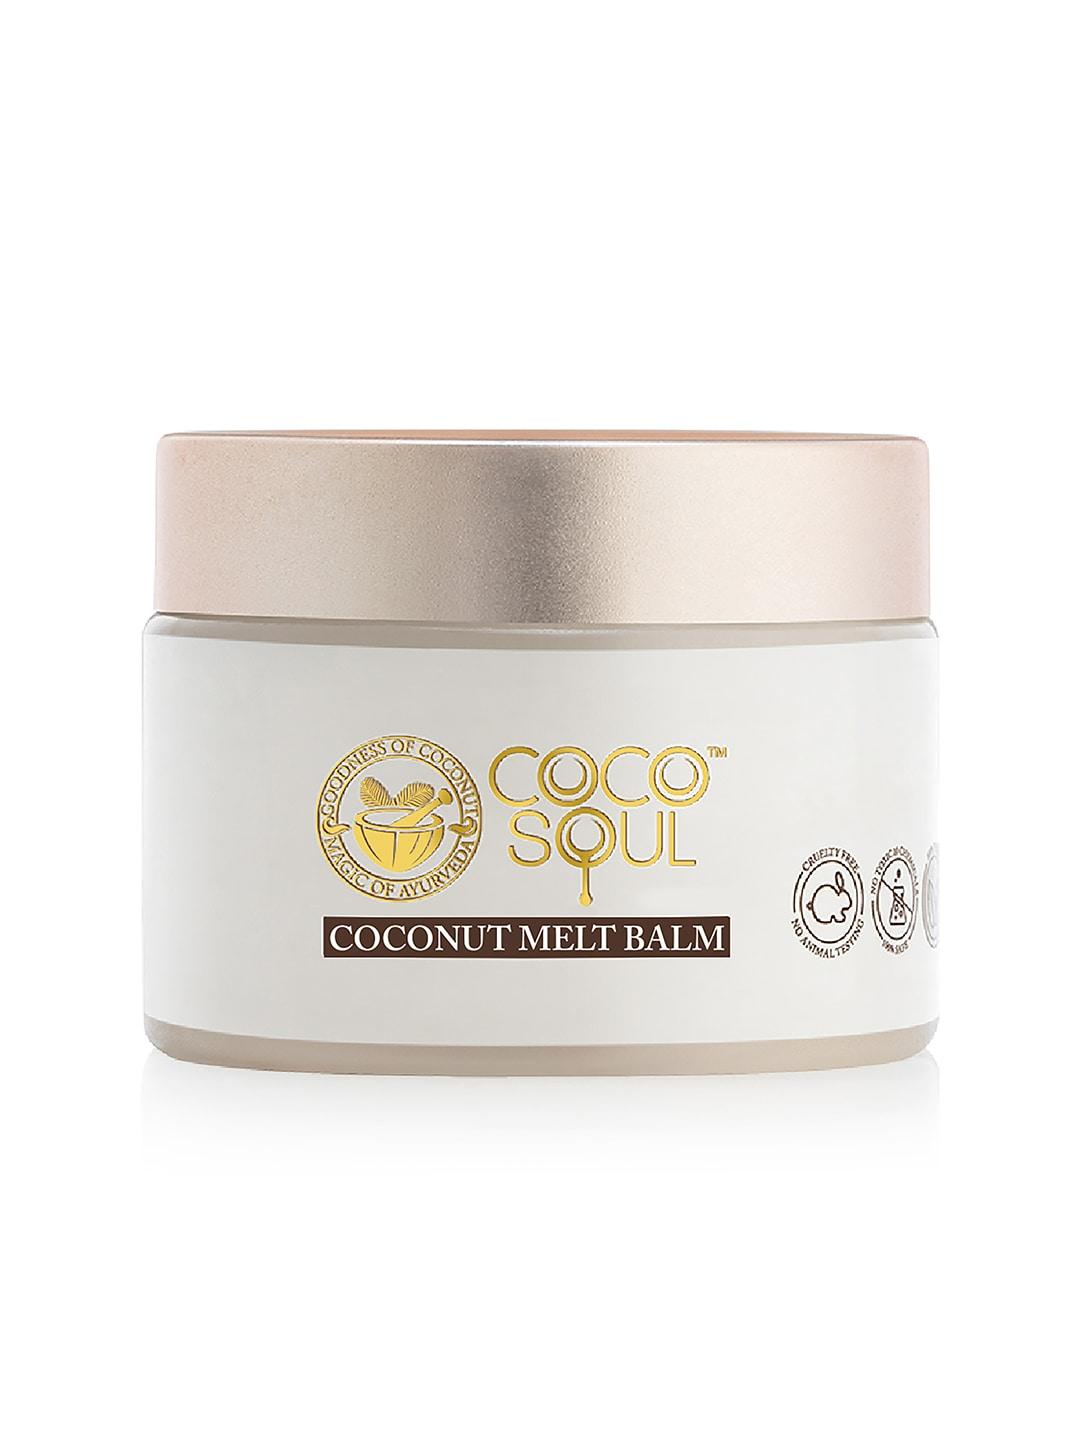 Coco Soul 100% Natural Actives Coconut Melt Balm Body Moisturiser - 50g